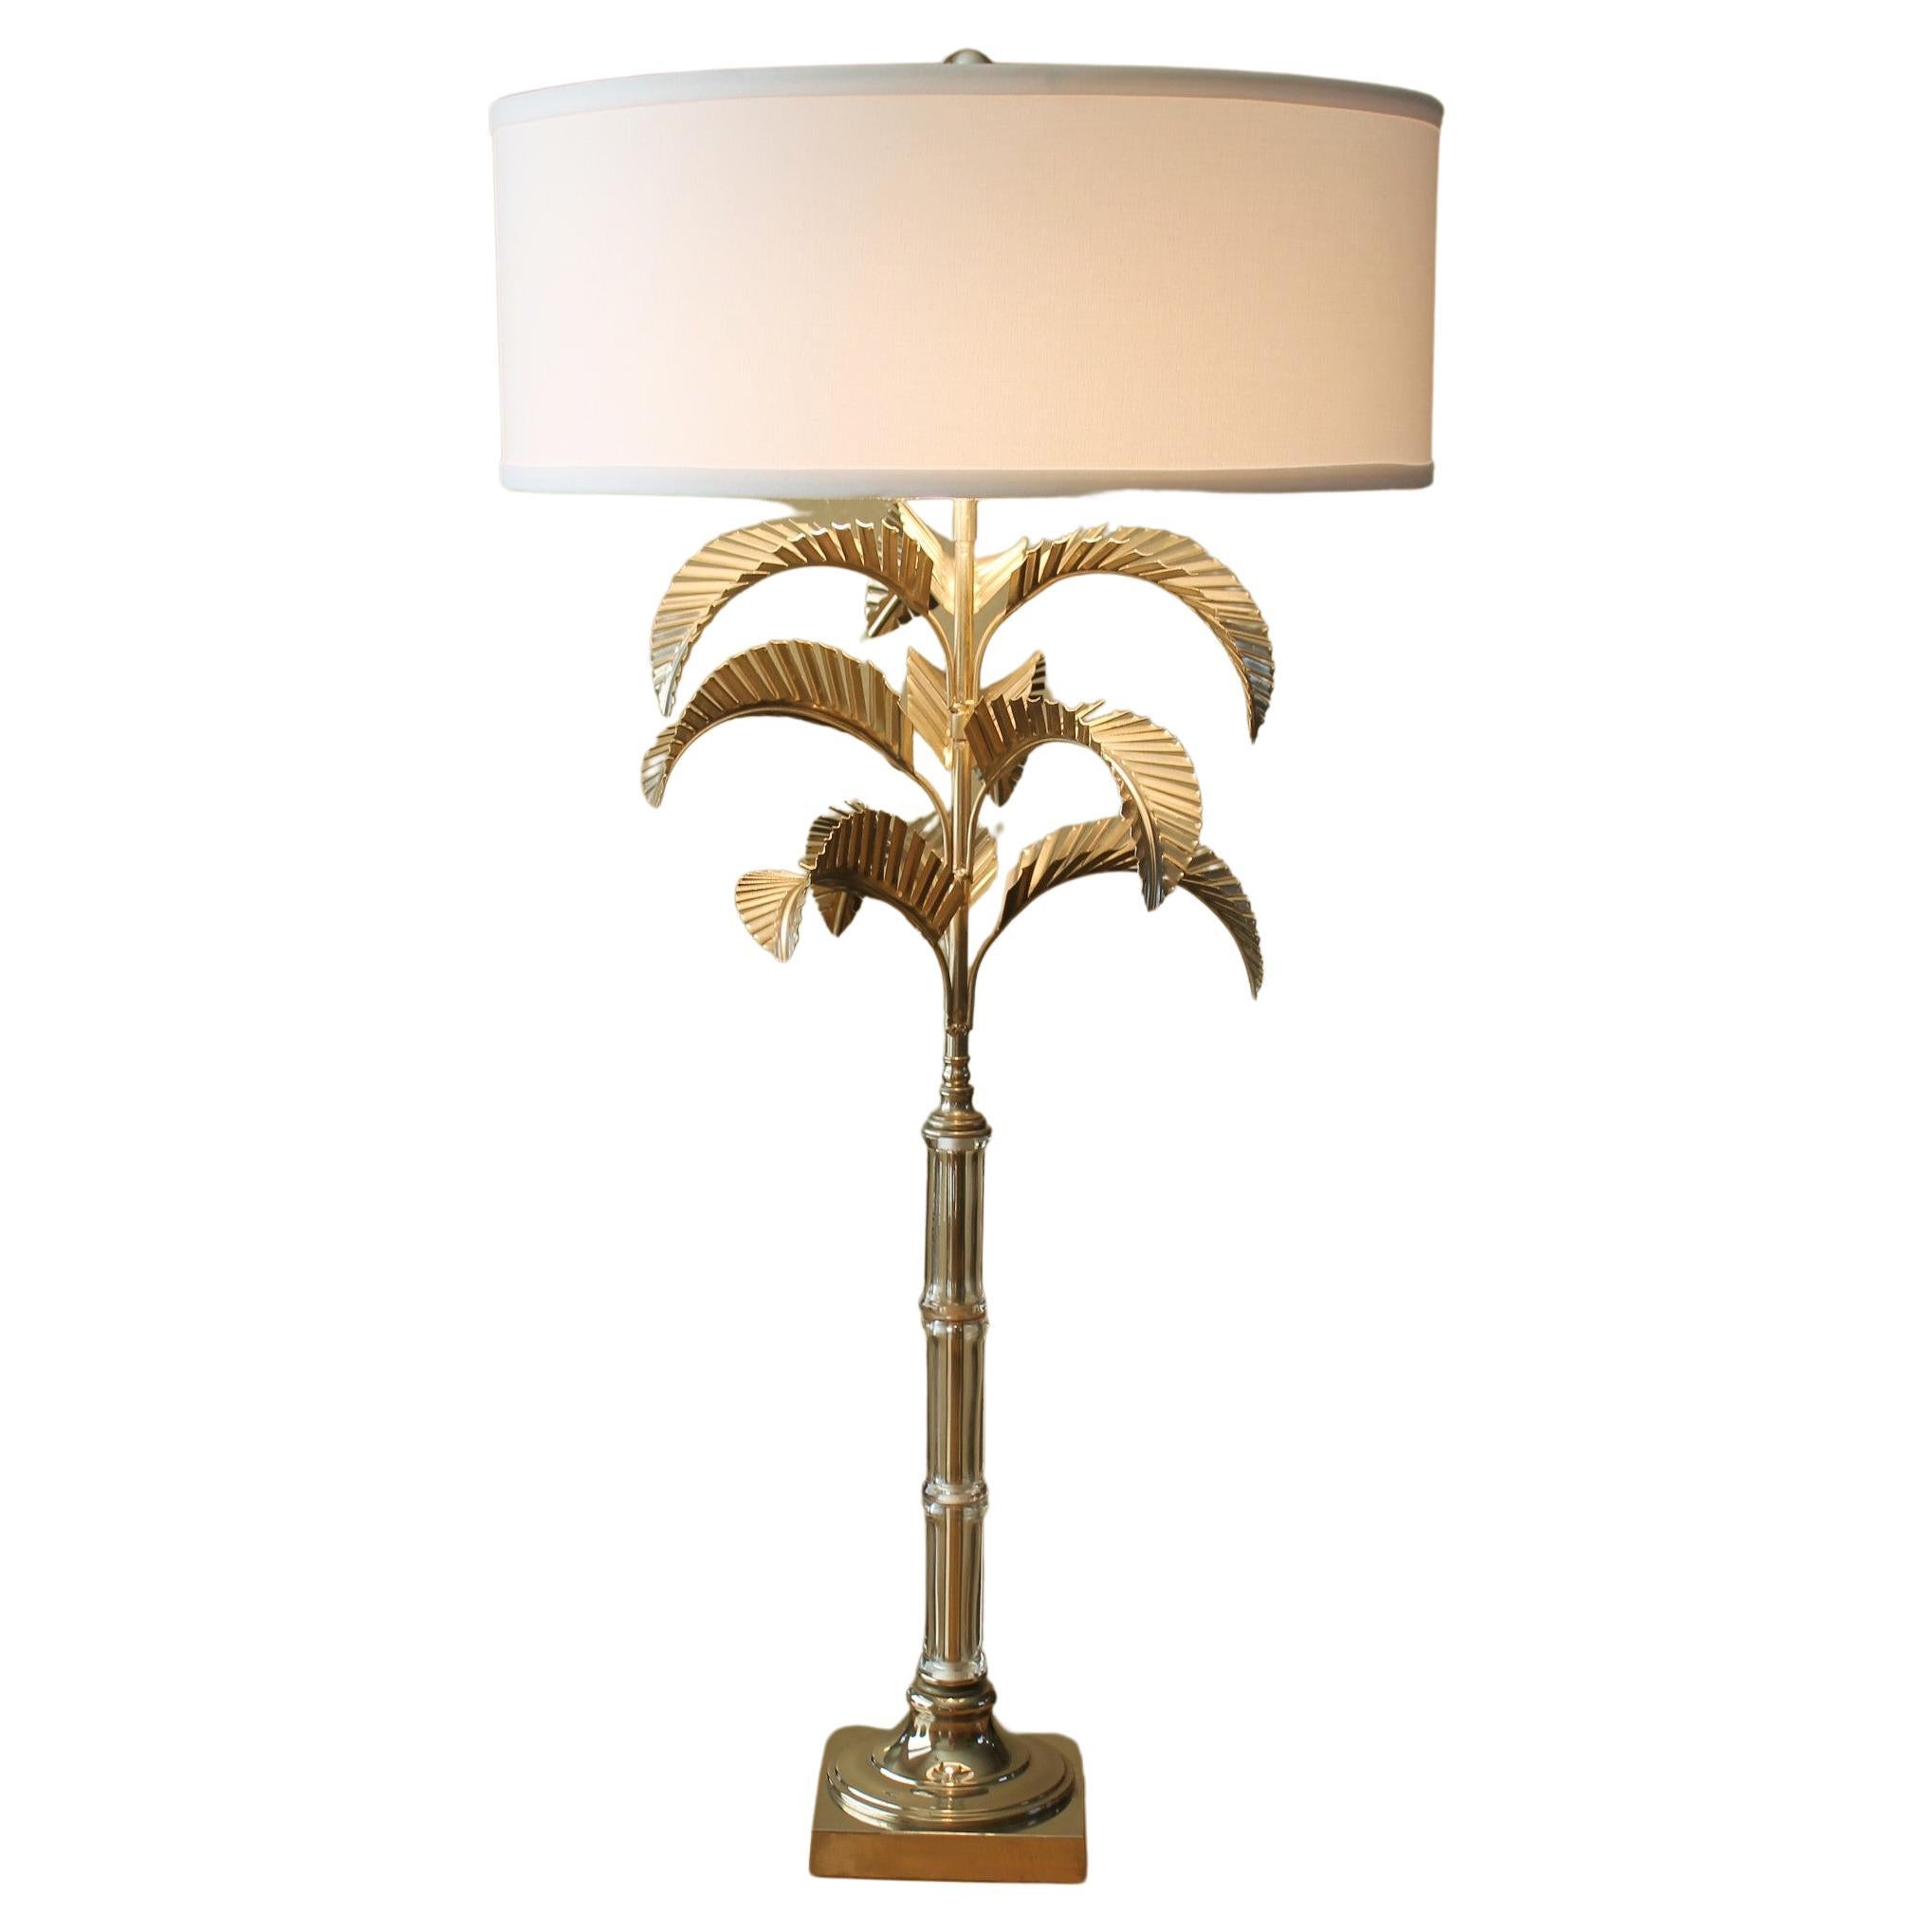 Monumental Chapman Metal Palm Tree Lamp. Maison Jansen West Palm Beach Regency For Sale